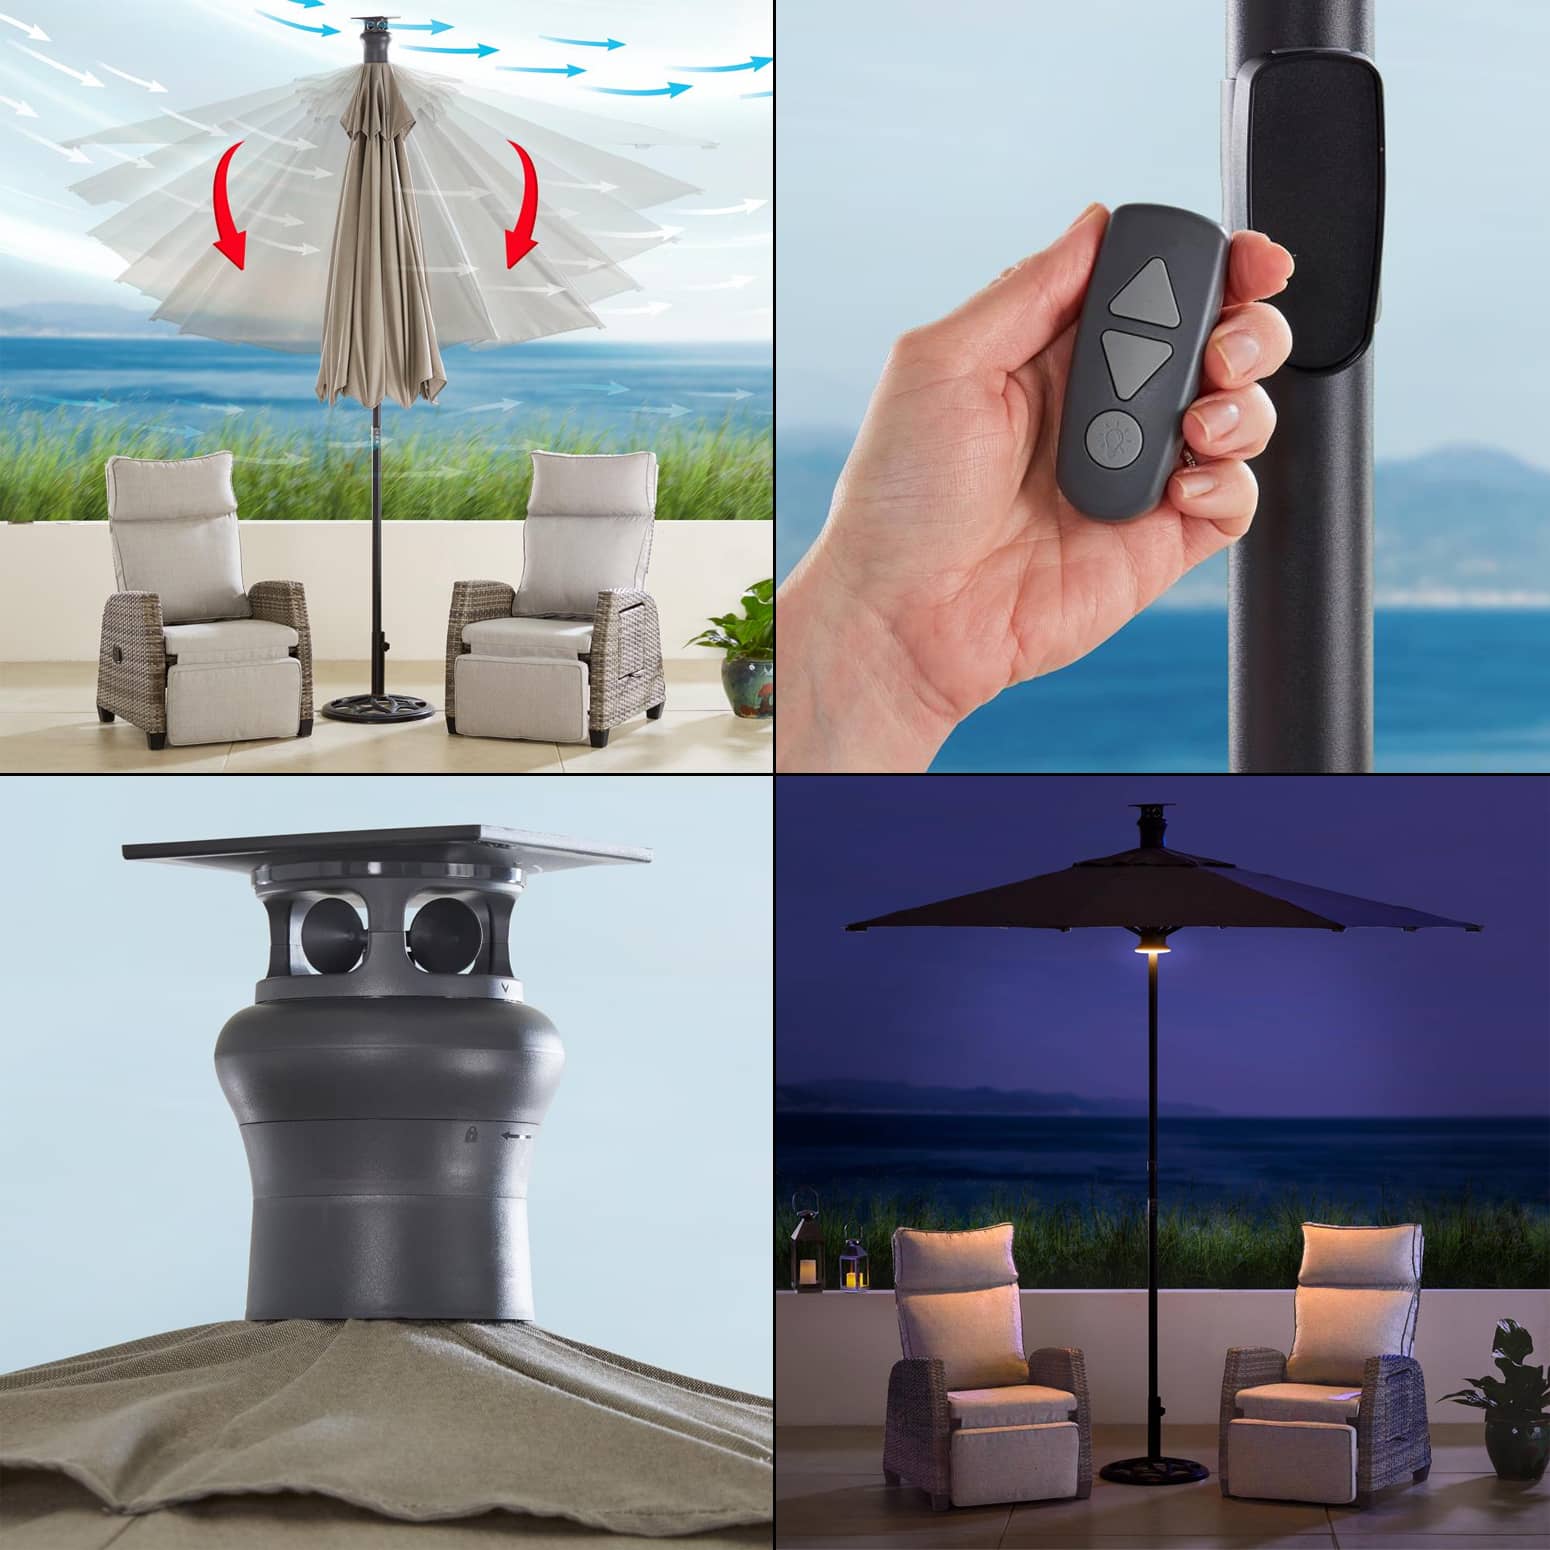 Wind-Sensing Auto-Close Patio Umbrella w/ Remote Control and LED Lighting